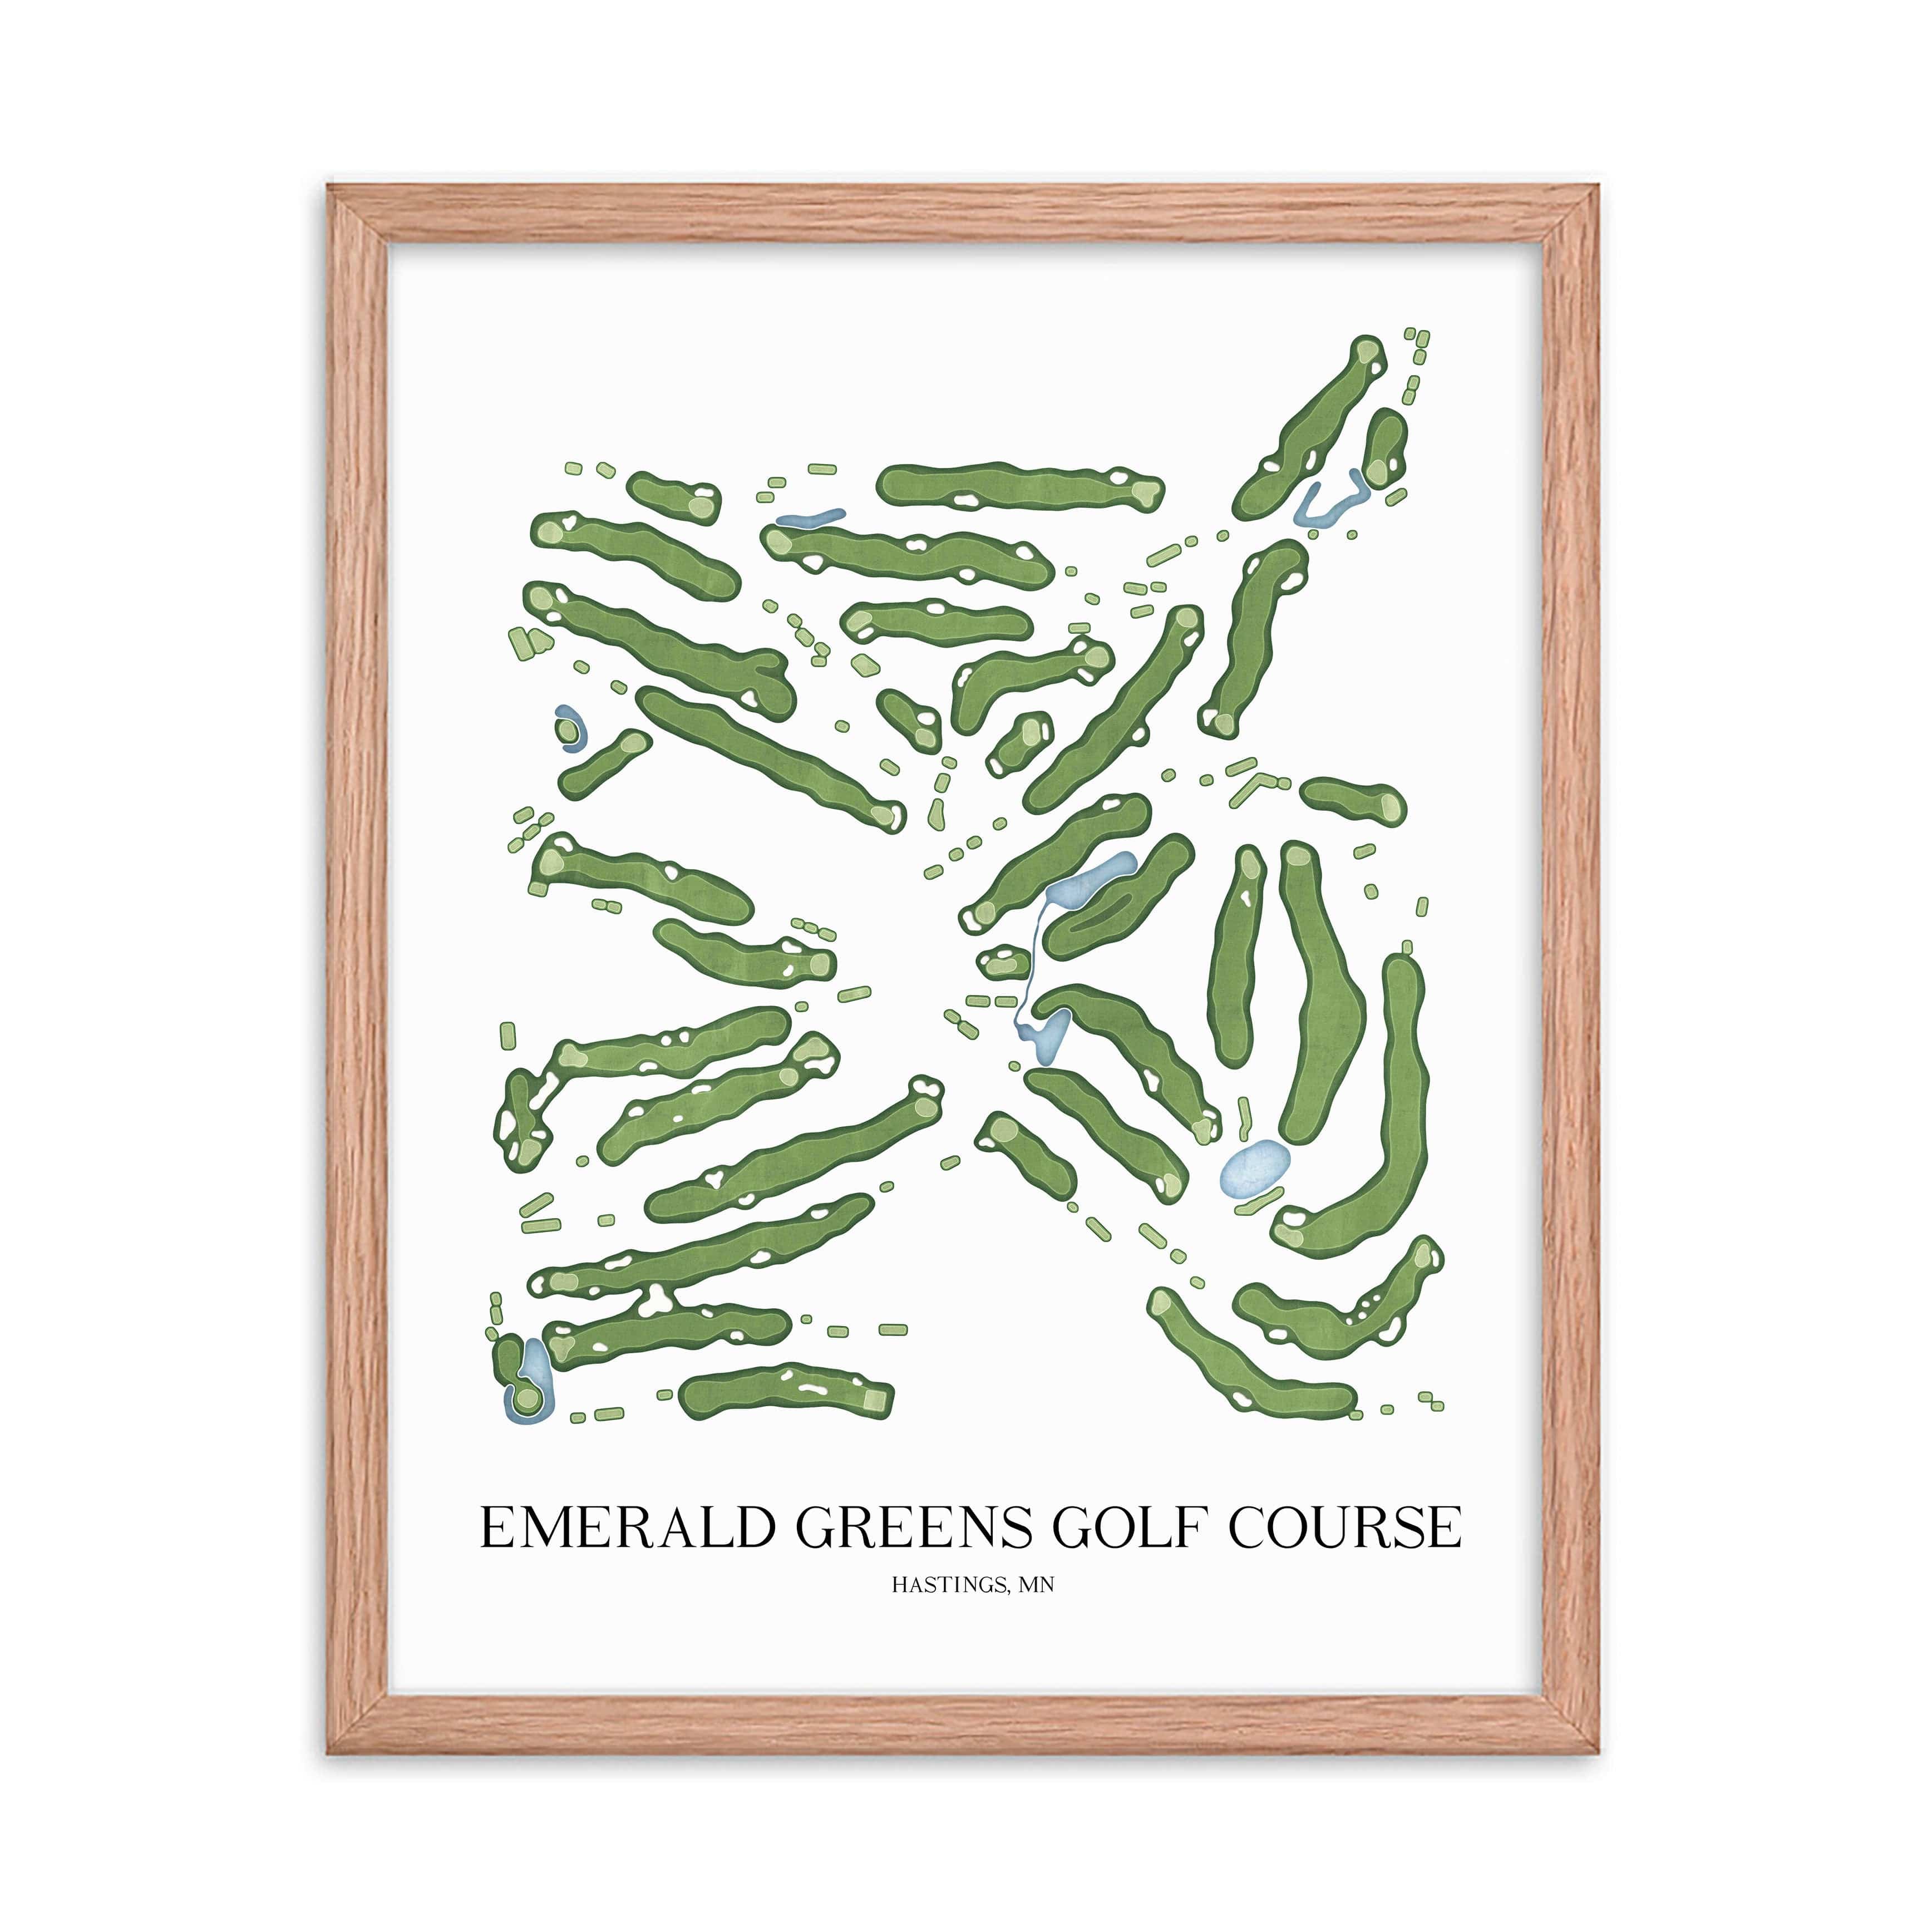 The 19th Hole Golf Shop - Golf Course Prints -  Emerald Greens Golf Course Golf Course Map